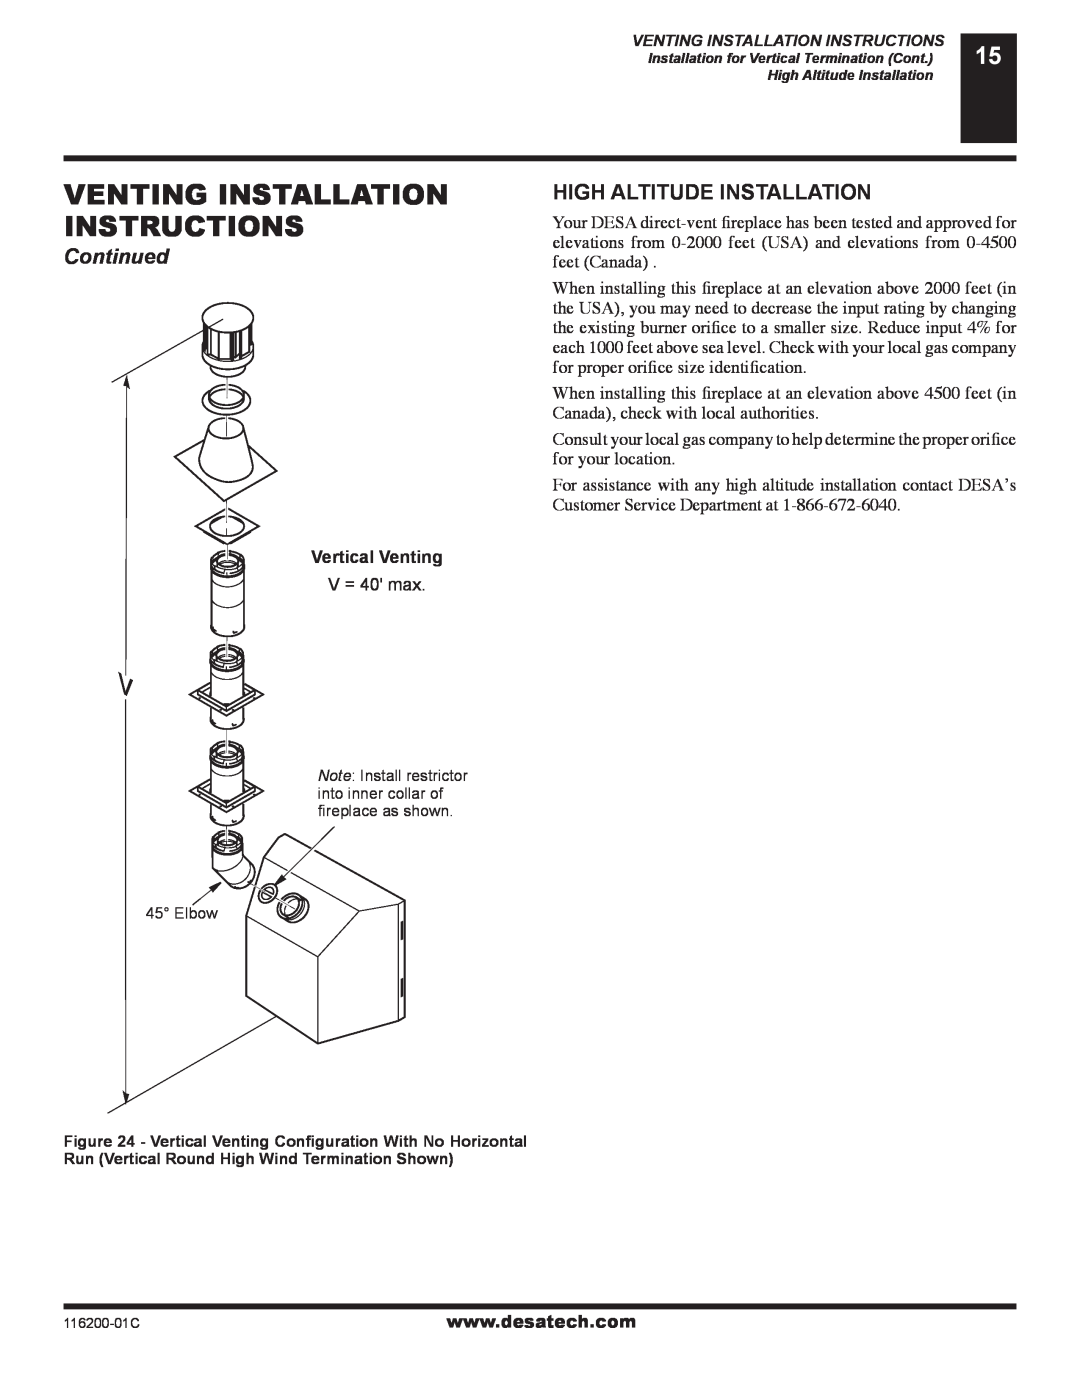 Desa CGCDV36NR, (V)VC36P High Altitude Installation, Venting Installation Instructions, Continued, Vertical Venting 